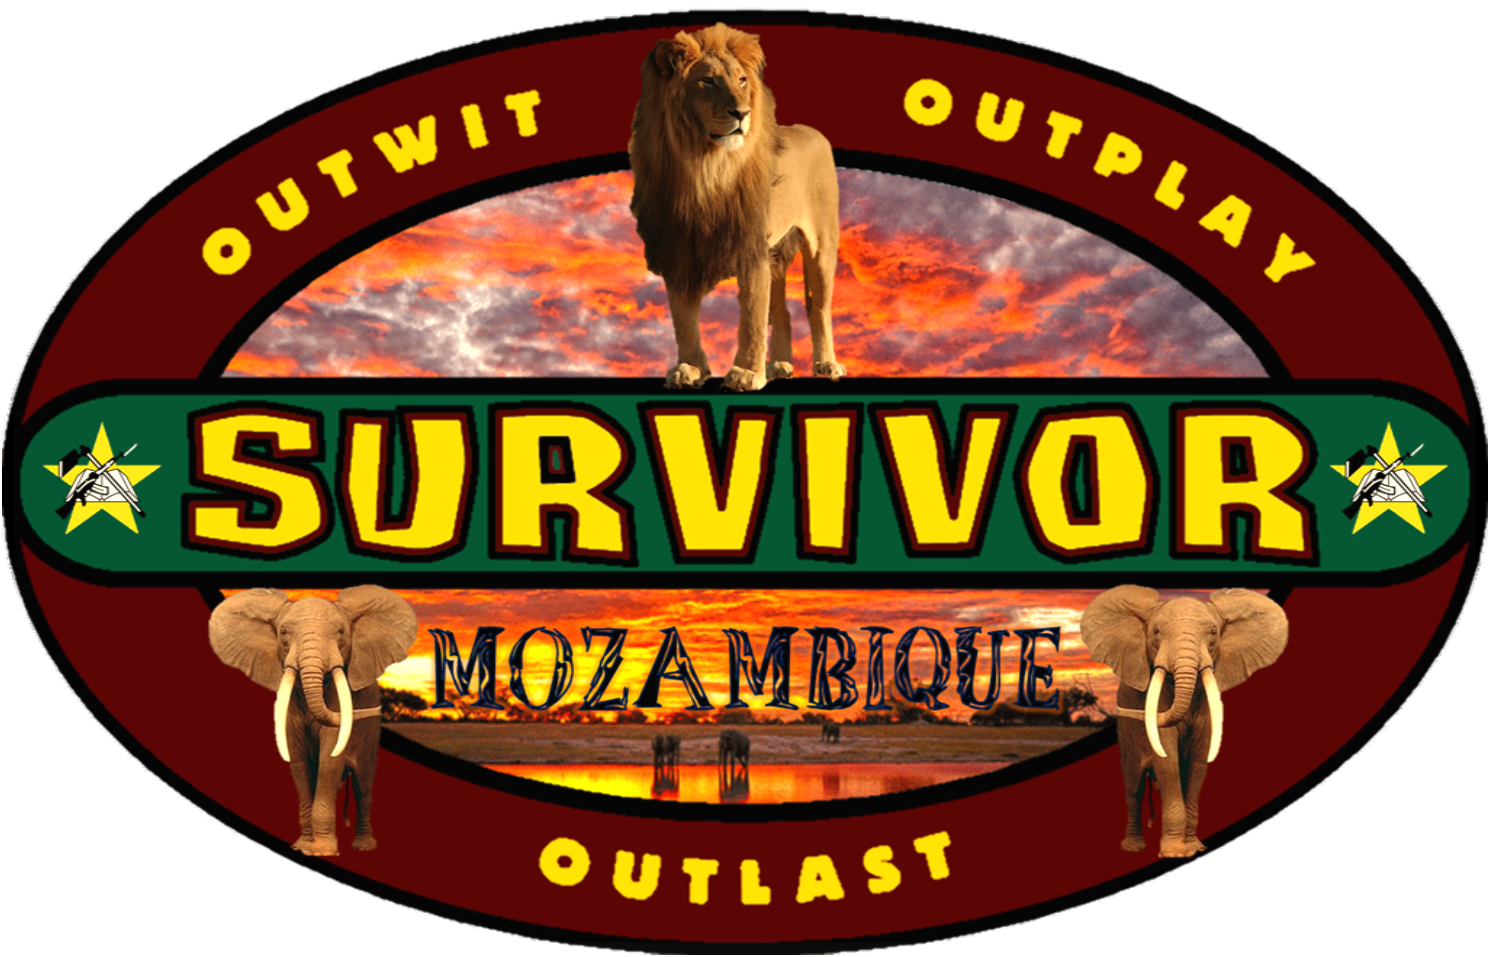 Logo Survivor kosong PNG Gambar berkualitas tinggi